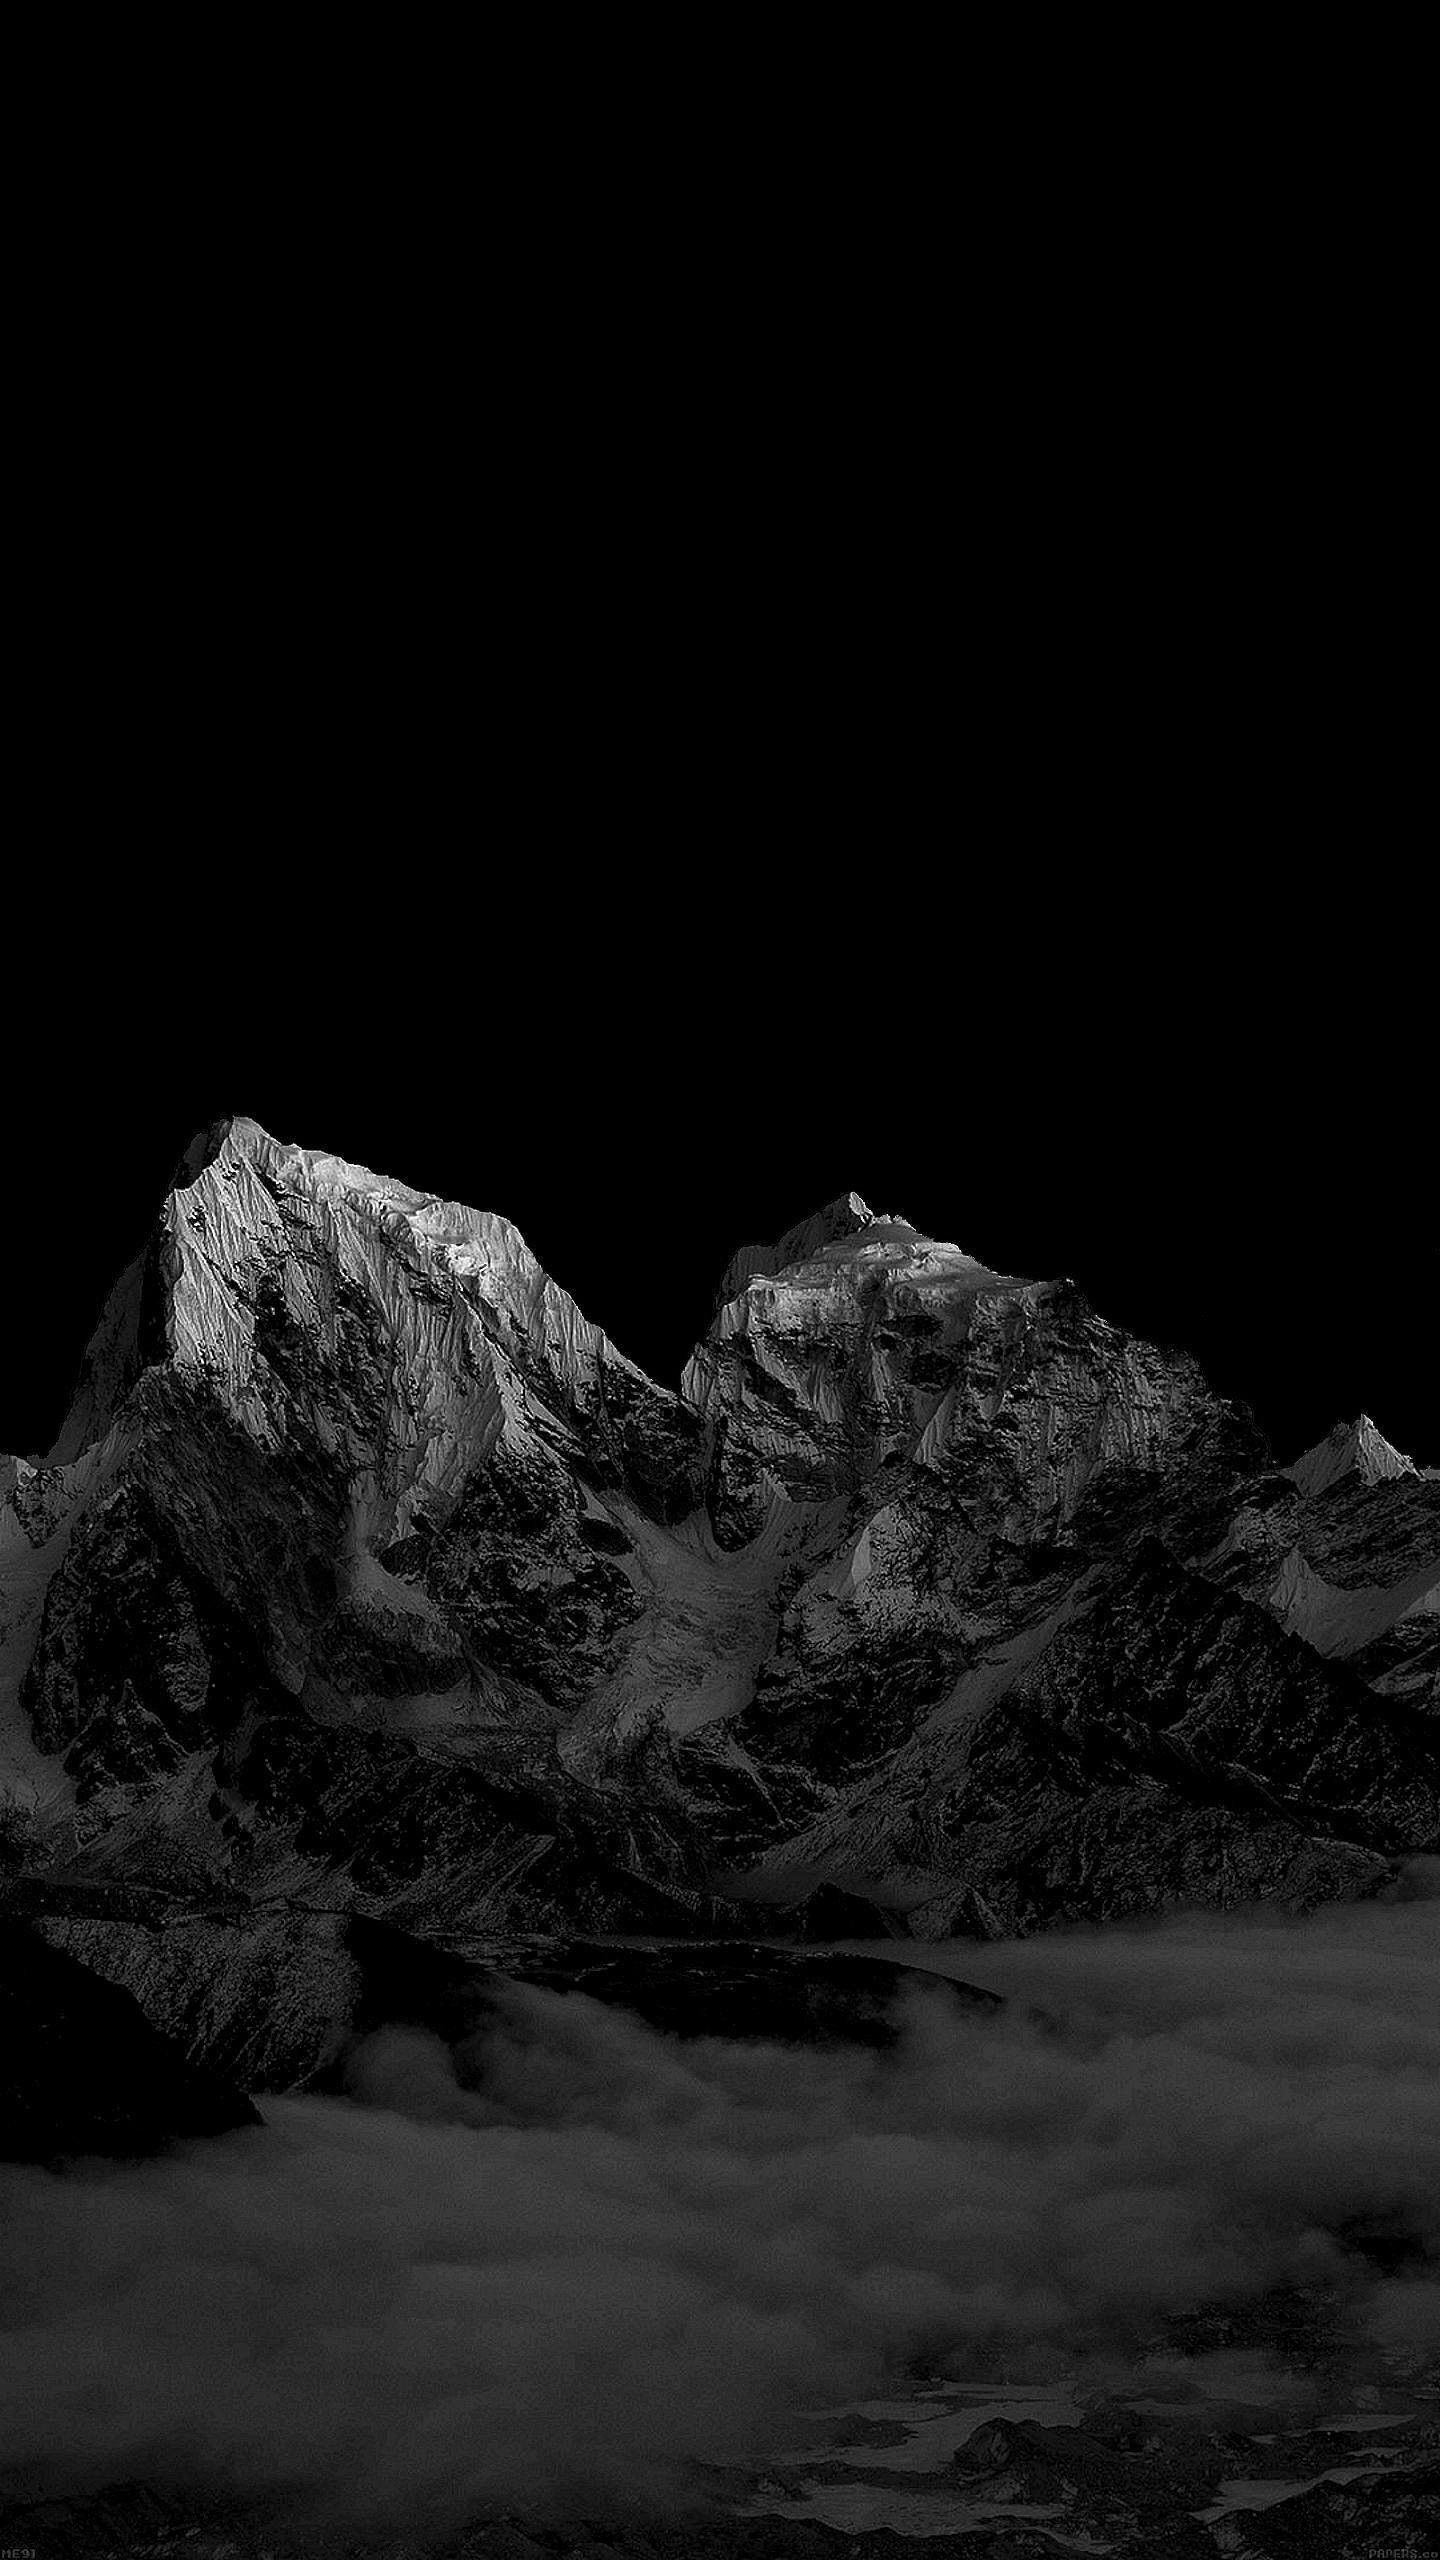 1440x Amoled Pure Black Mountains Data Id 206243 iPhone Wallpaper Dark